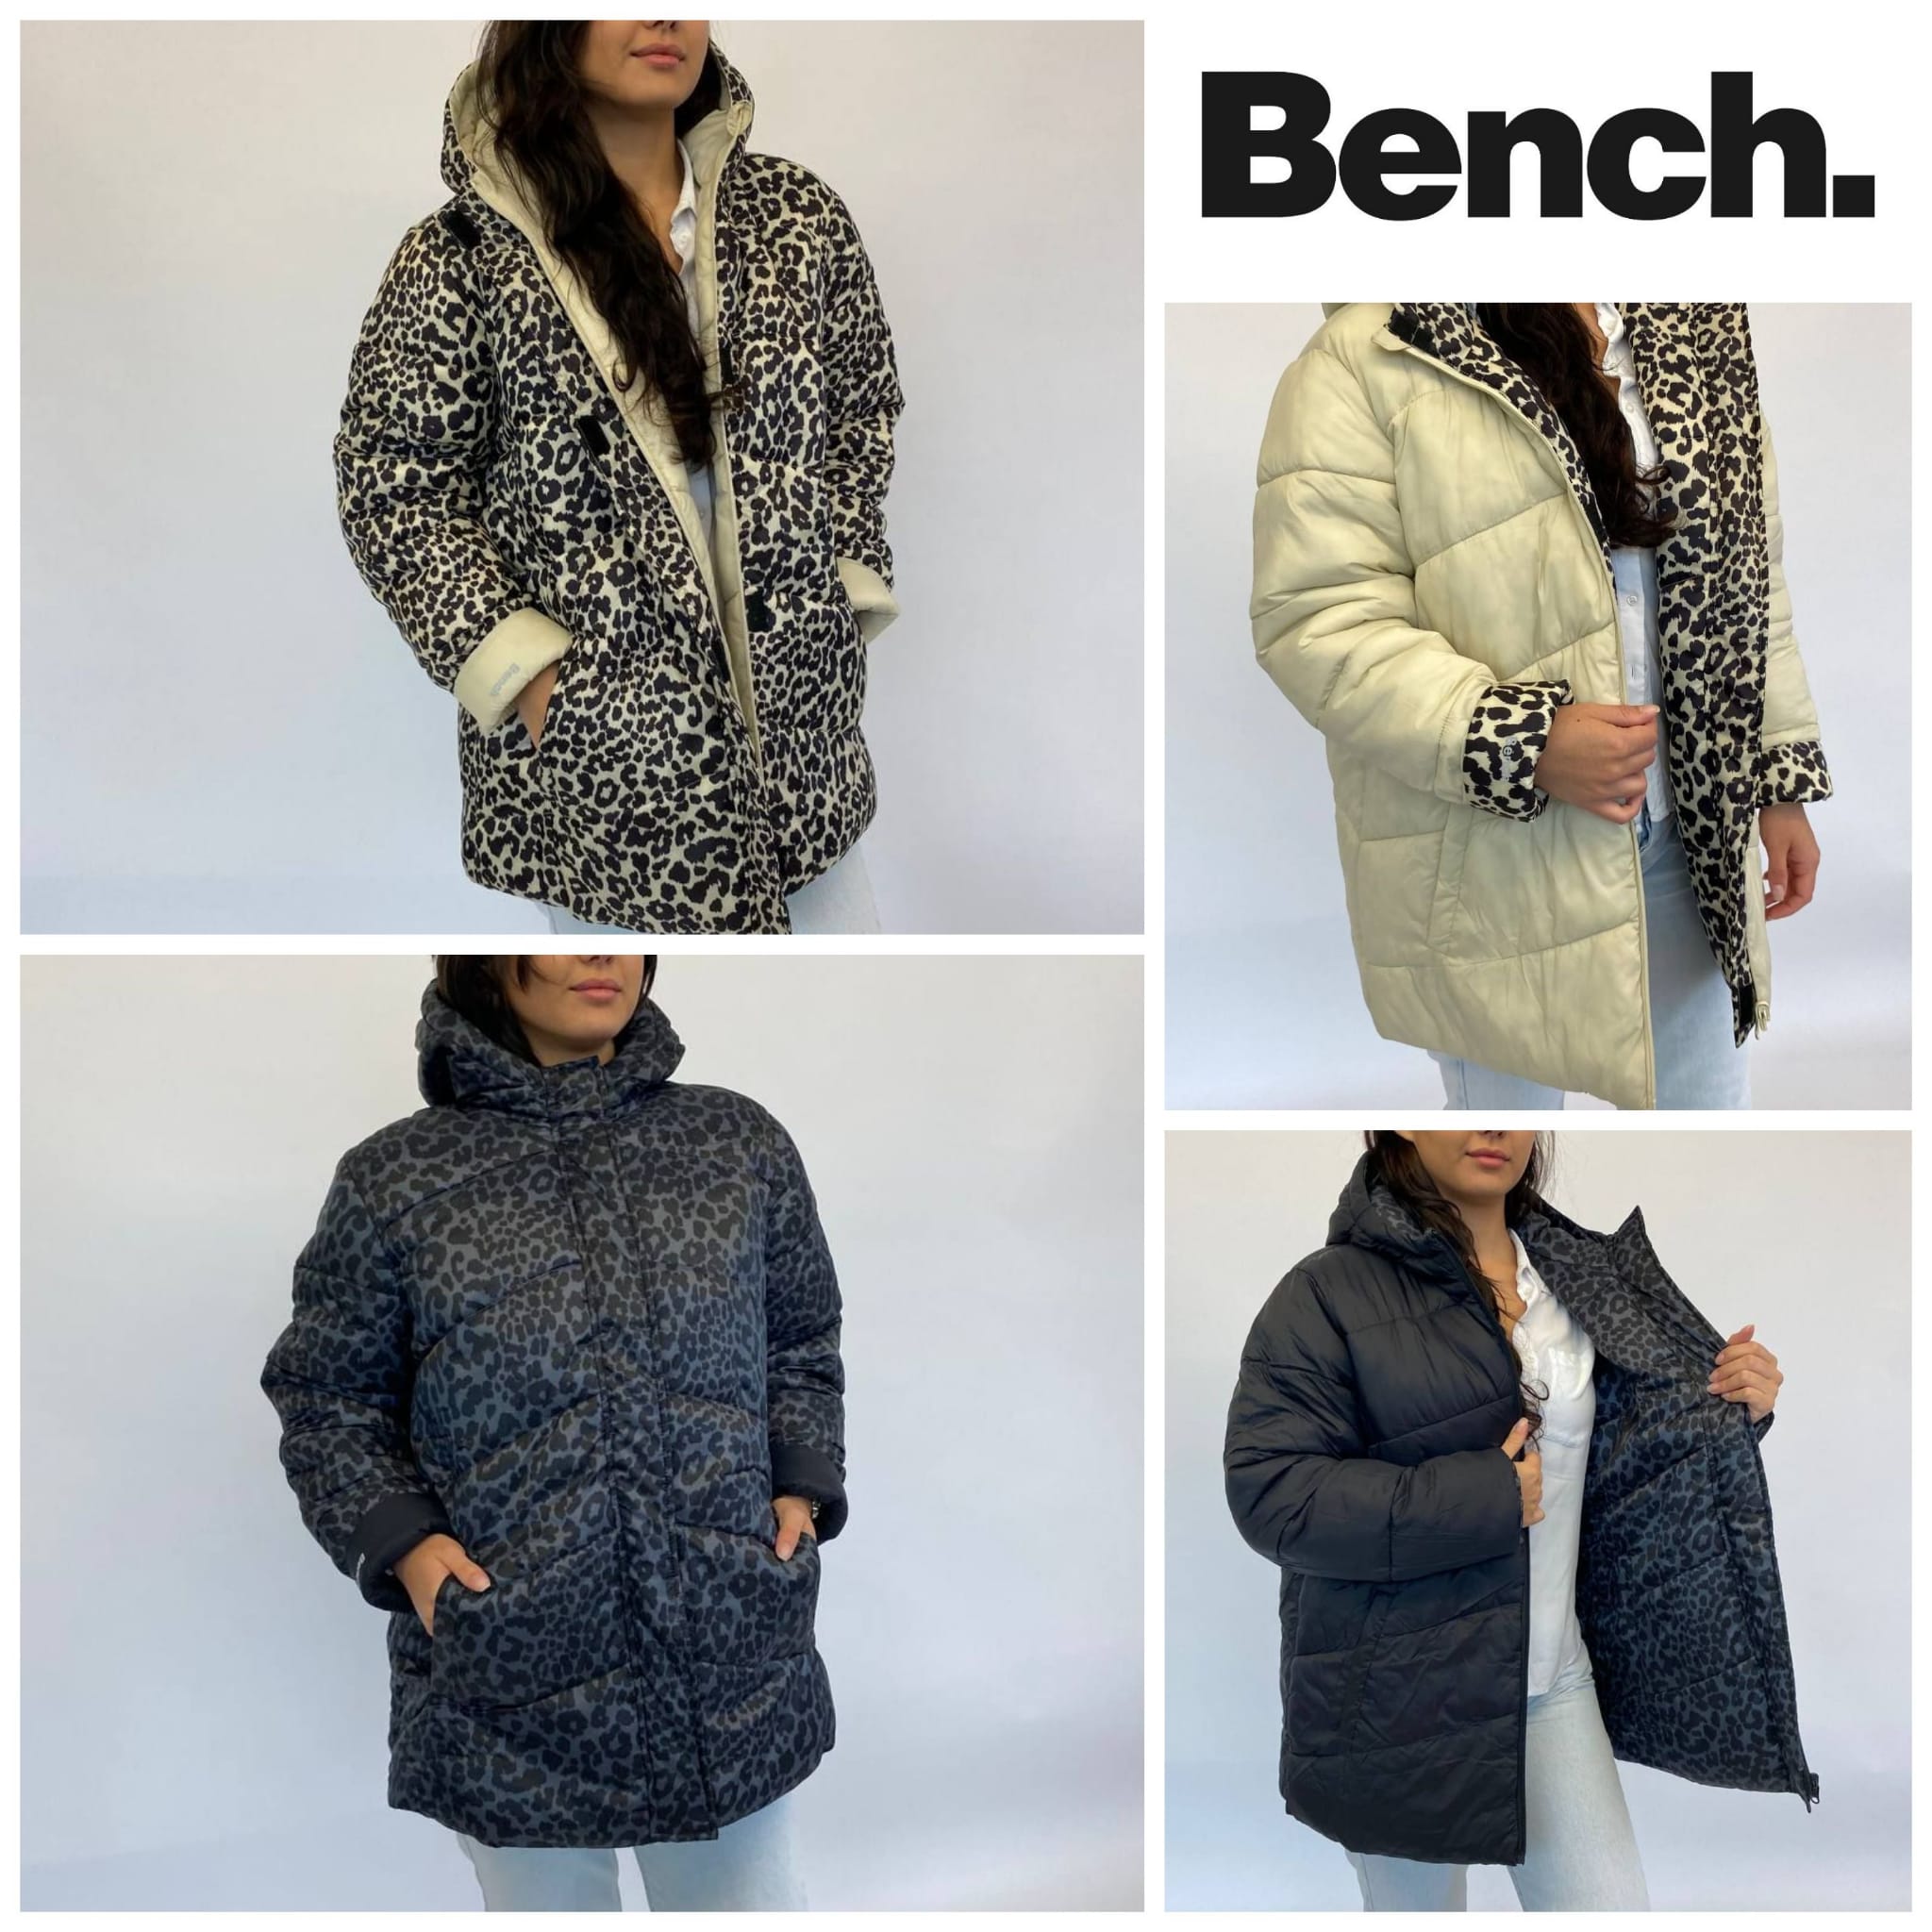 Bench women's reversible leopard print jackets 